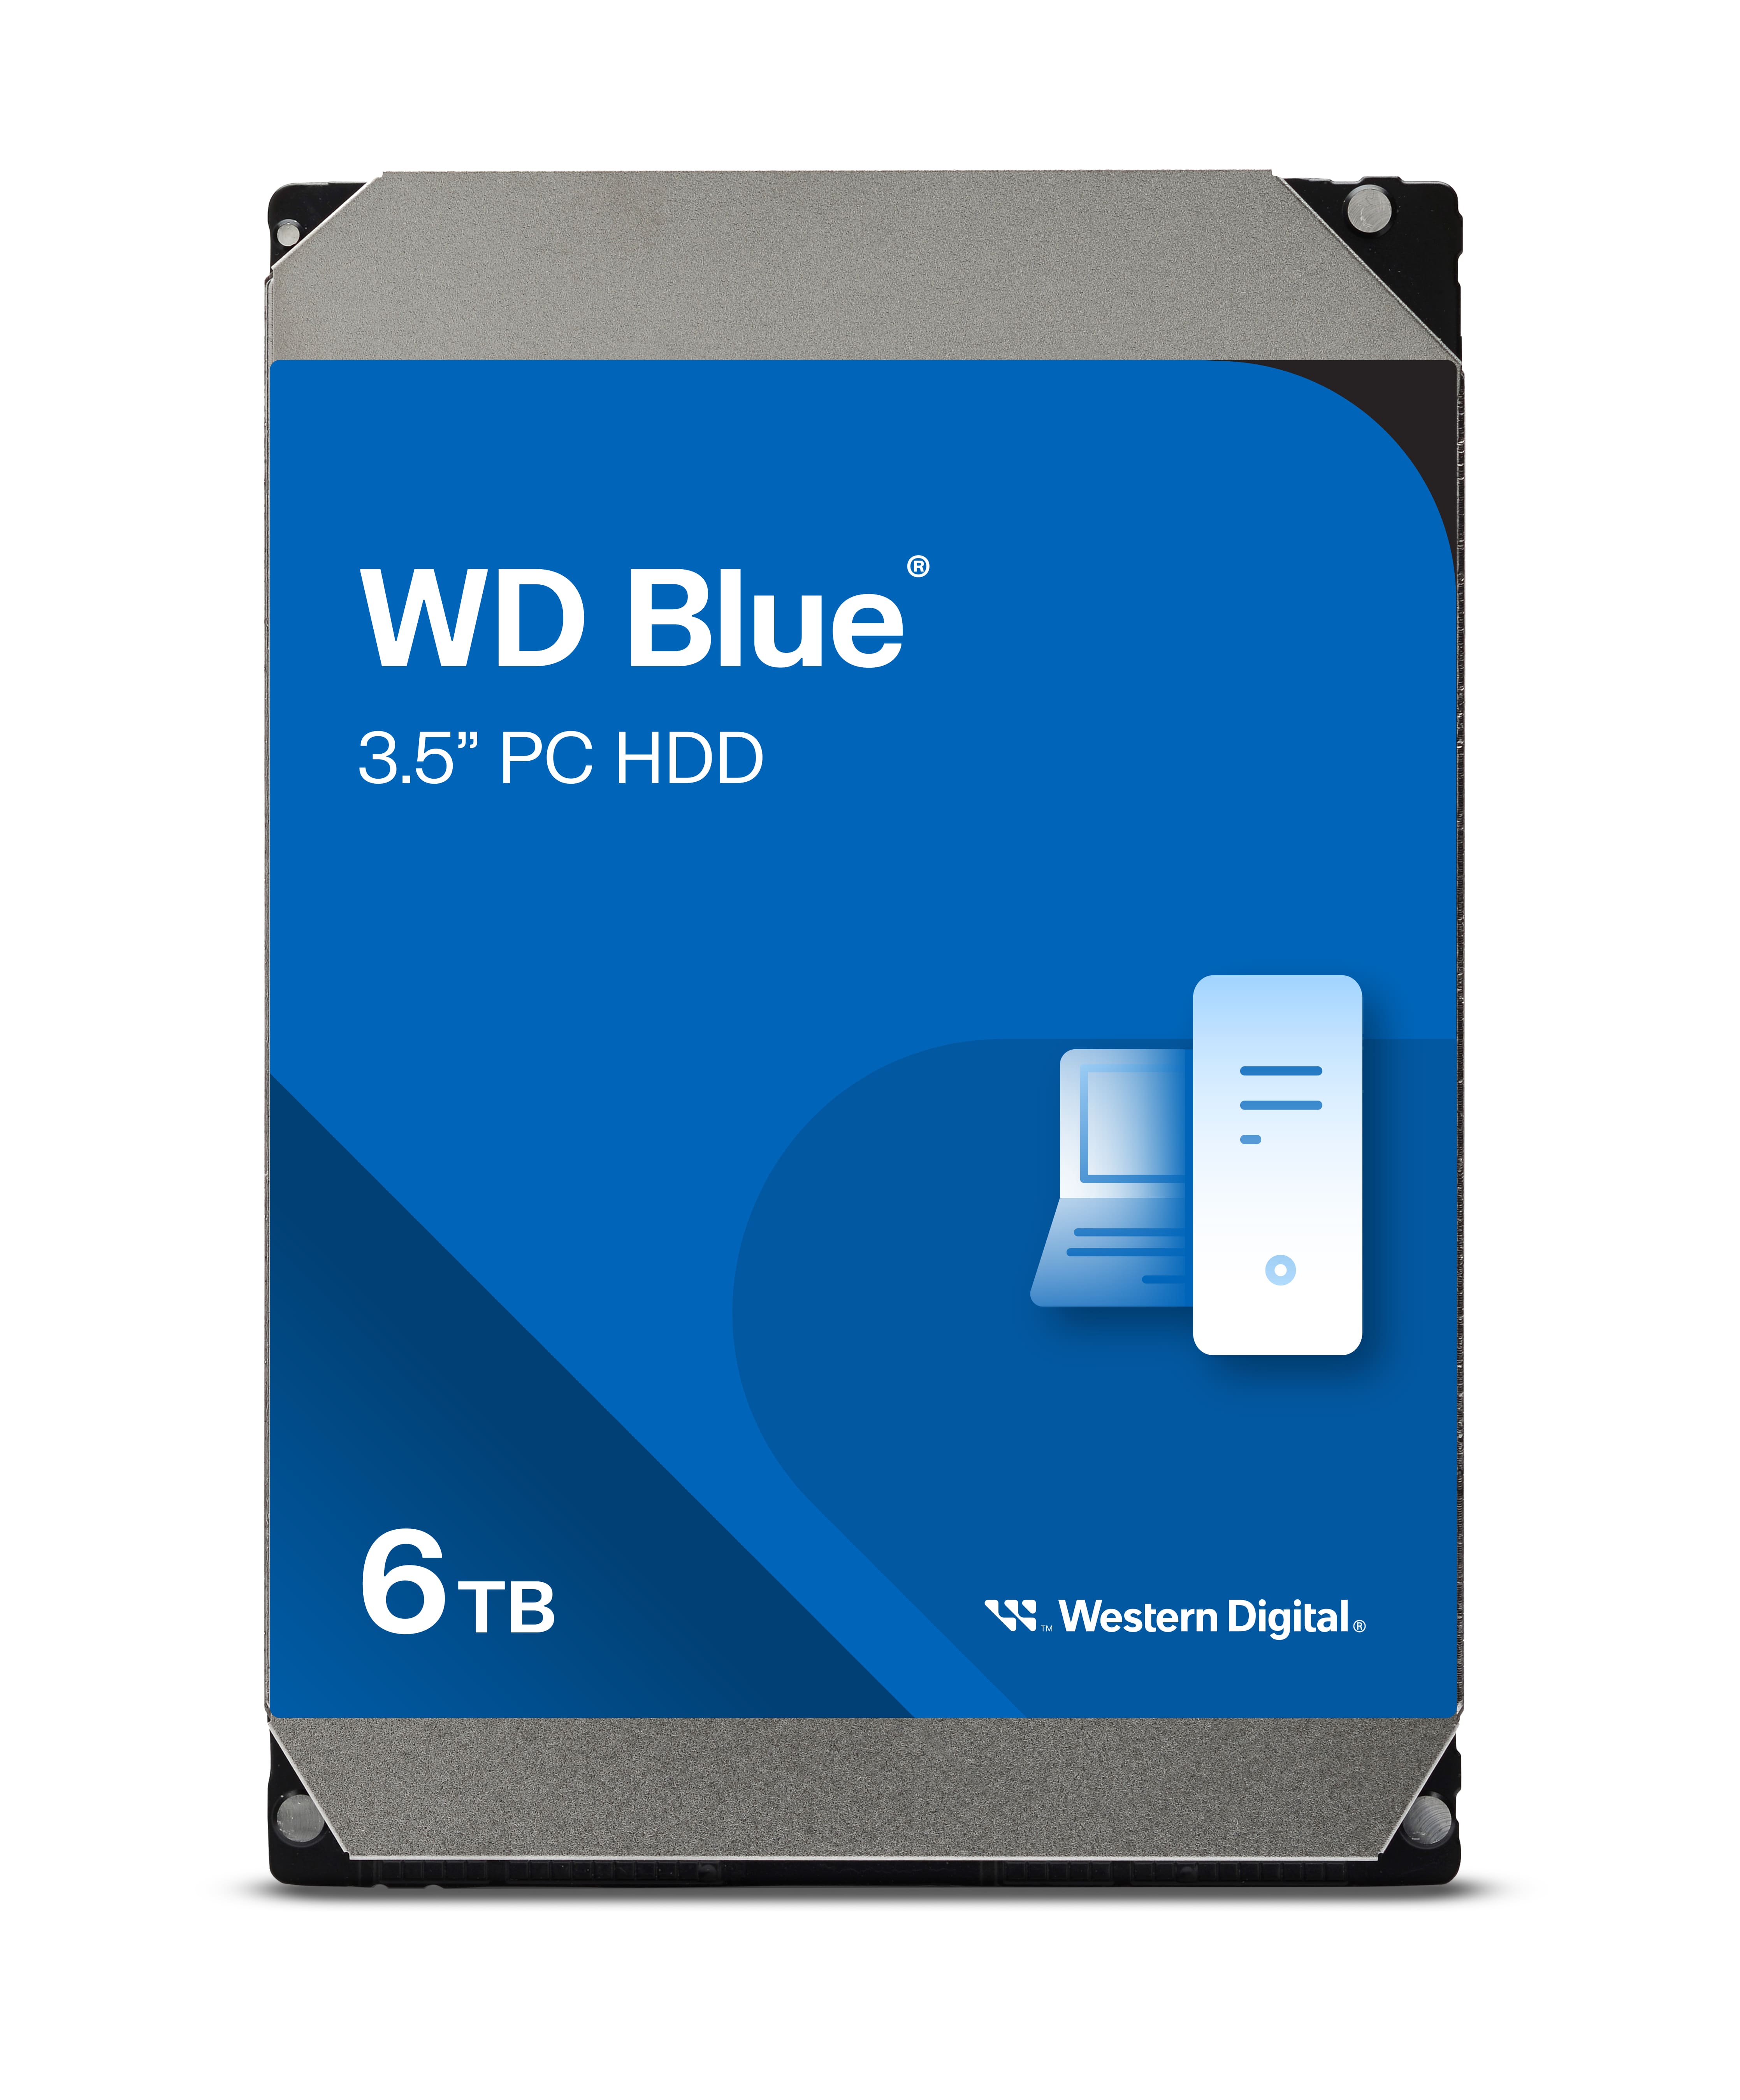 WESTERN DIGITAL 3.5インチ内蔵 HDD6TB WD60EZAX [6TB 5400]＜メーカー2年保証＞｜パソコン・スマートフォン・ デジタル機器販売のPC DEPOT(ピーシーデポ)WEBSHOP